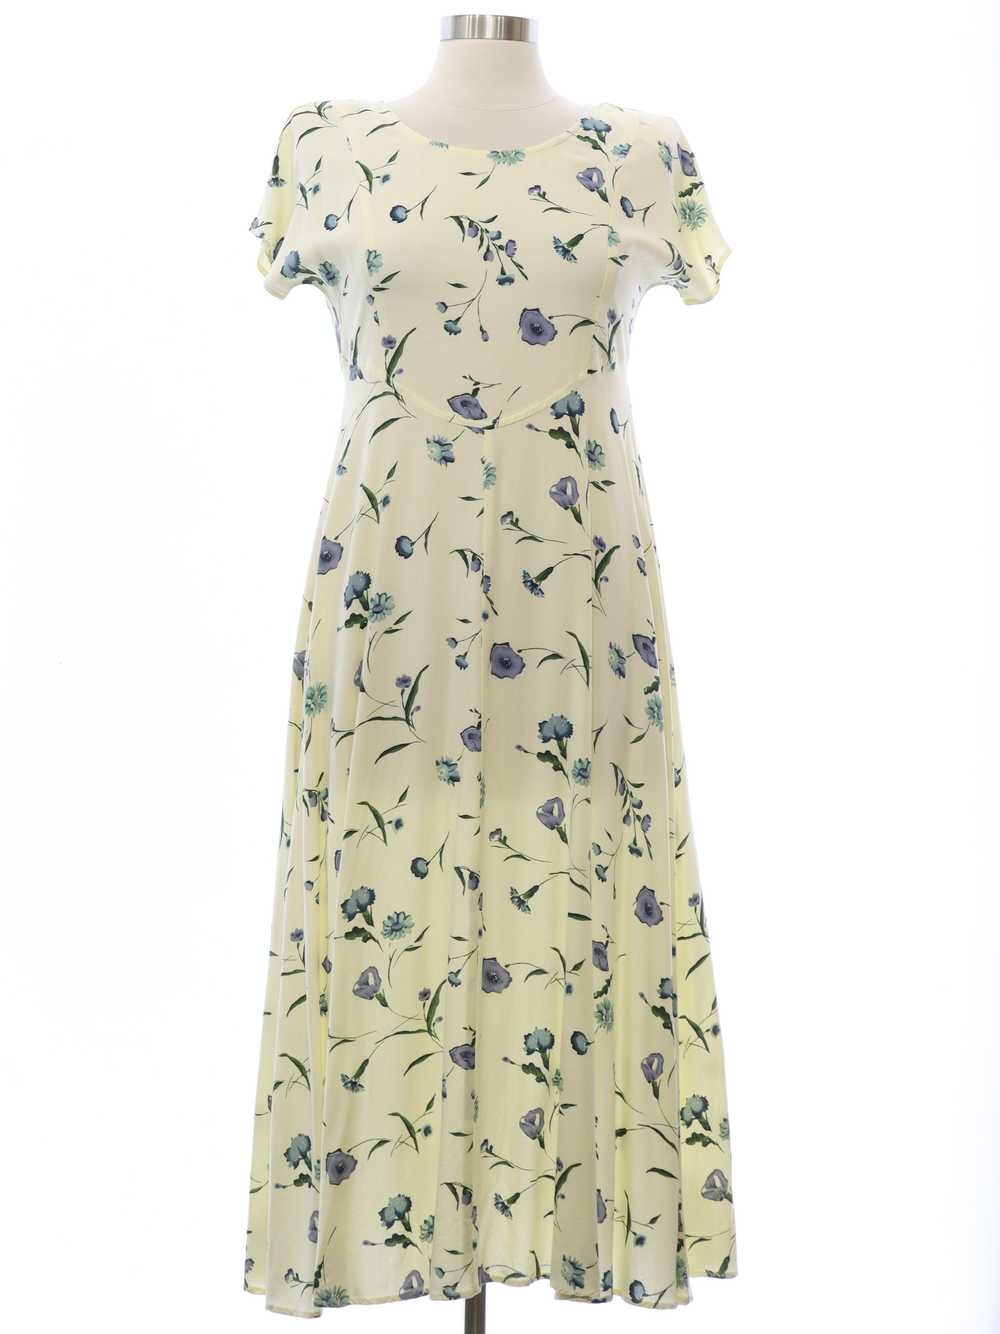 1980's Rayon Blend Maxi Dress - image 1